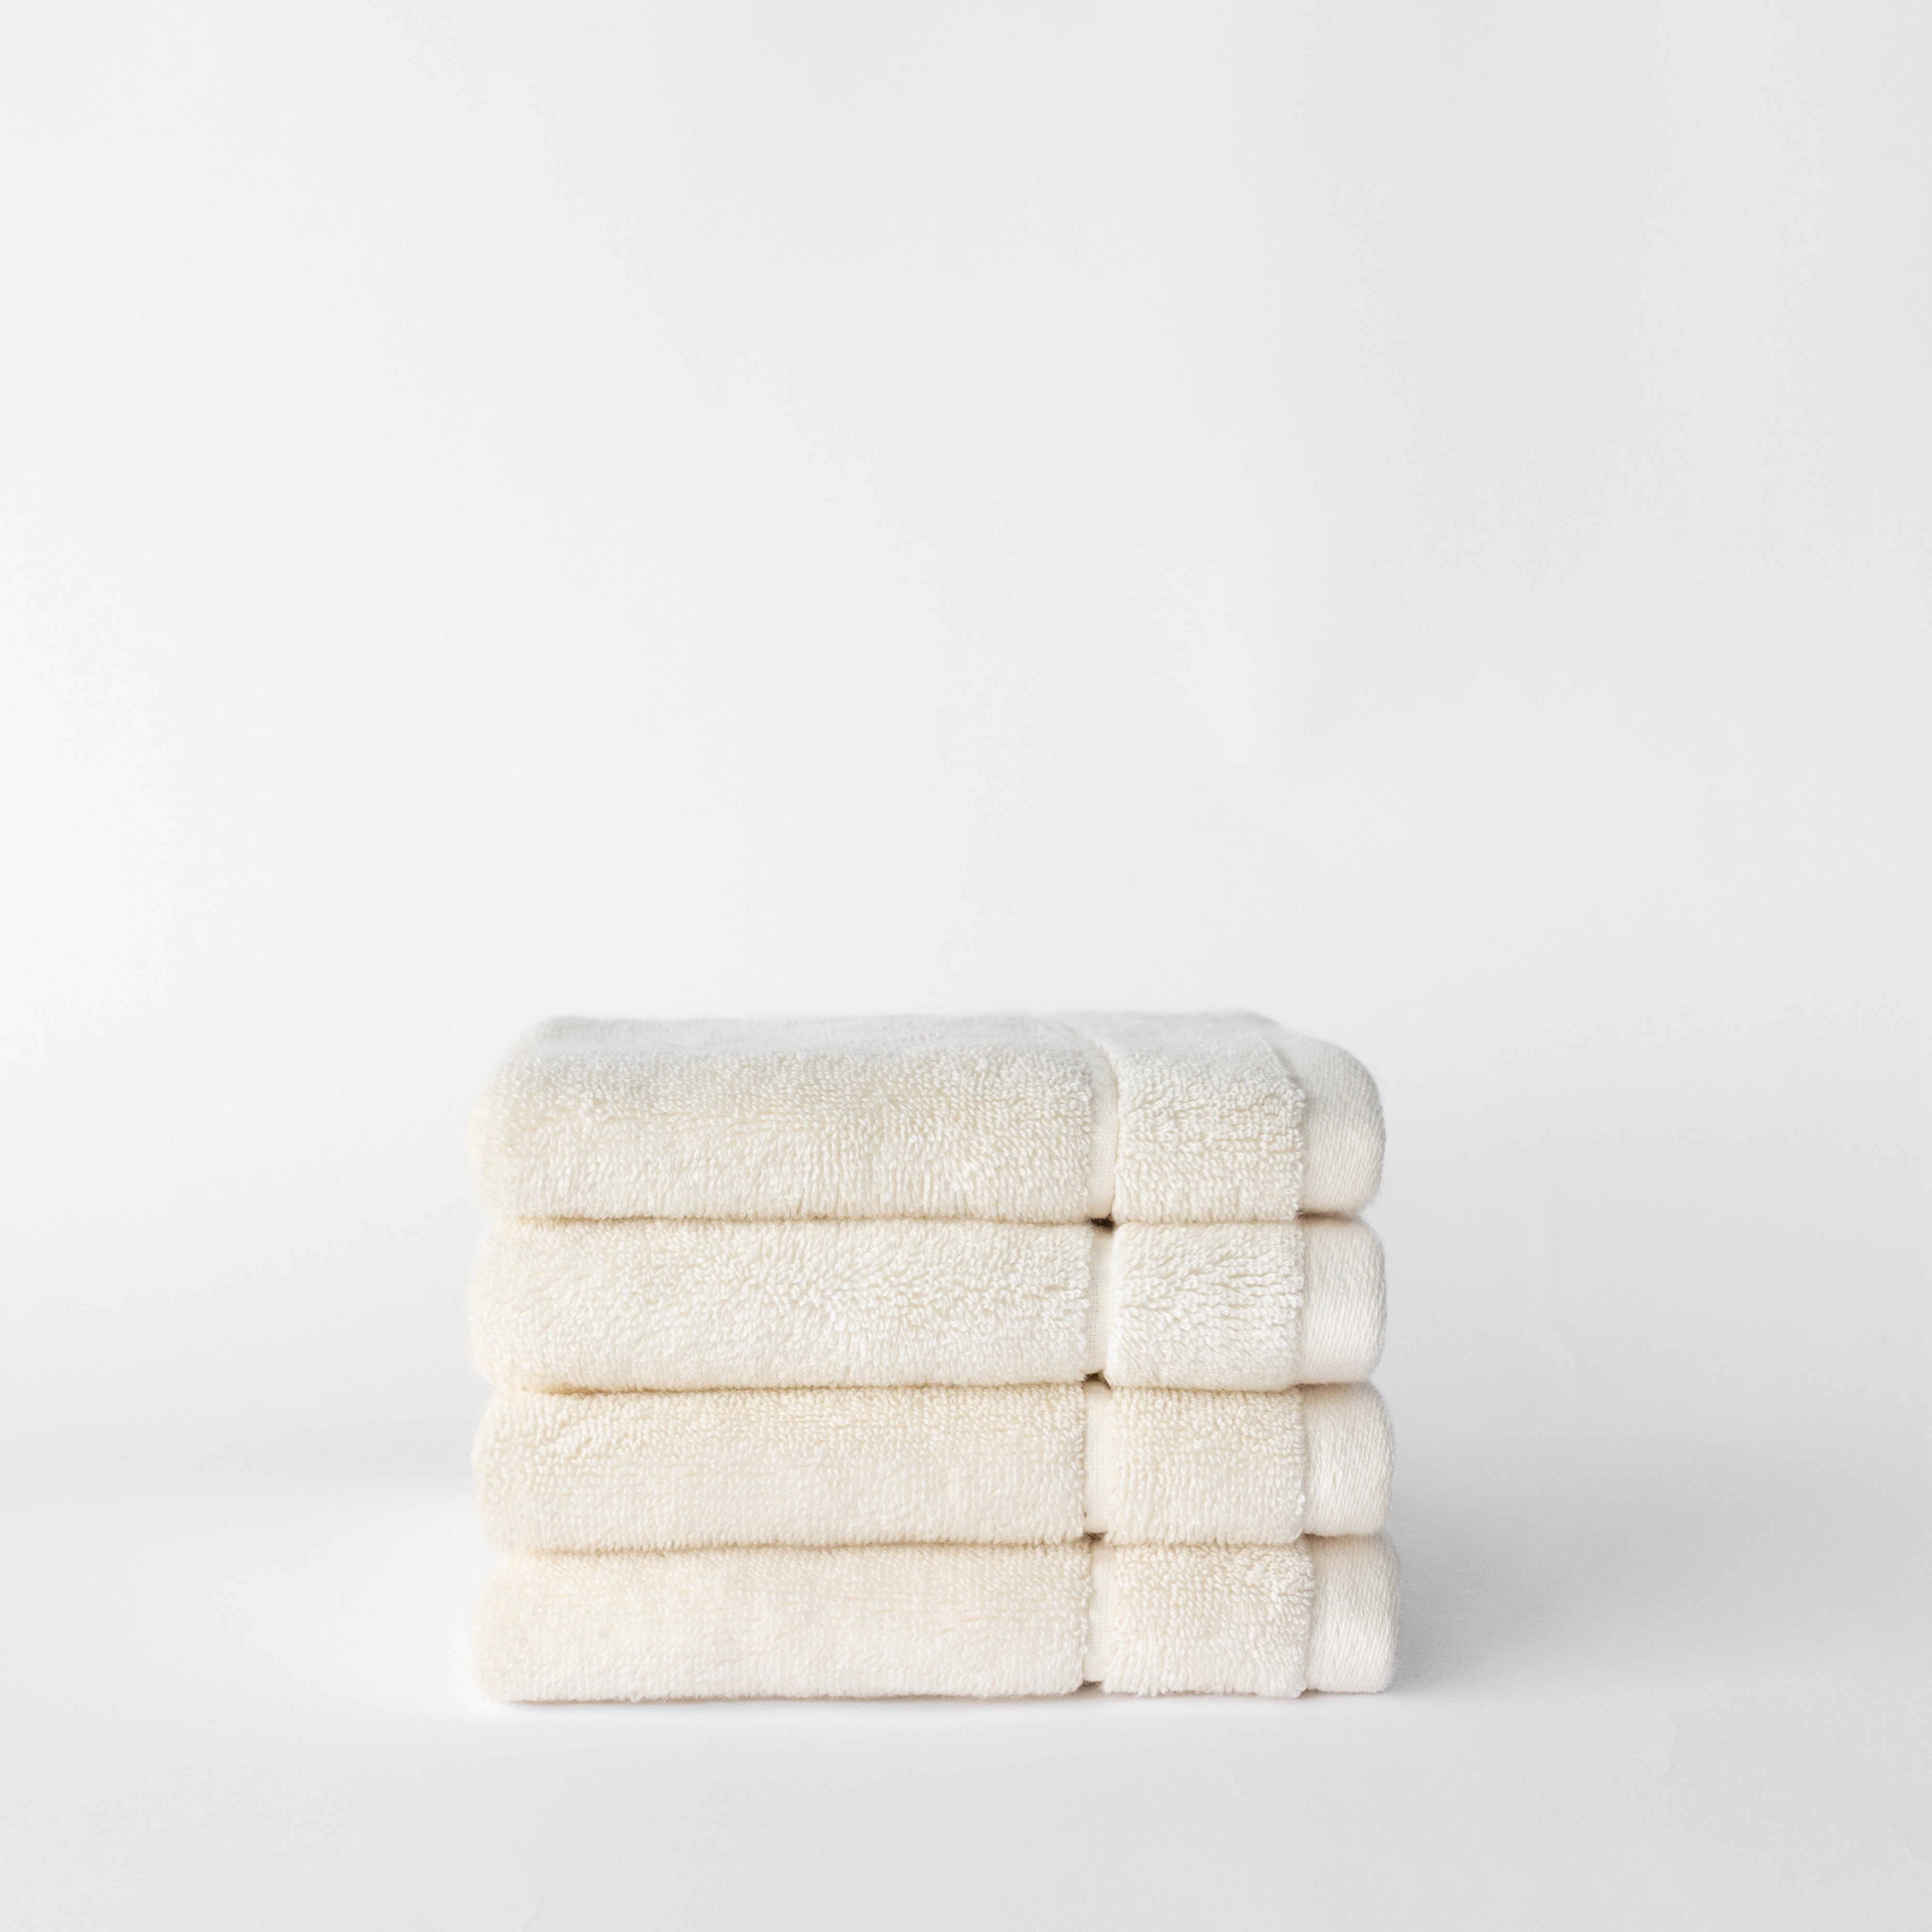 Creme Premium Plush Wash Cloths. Photo of Premium Plush Wash Cloths taken with white background |Color:Creme